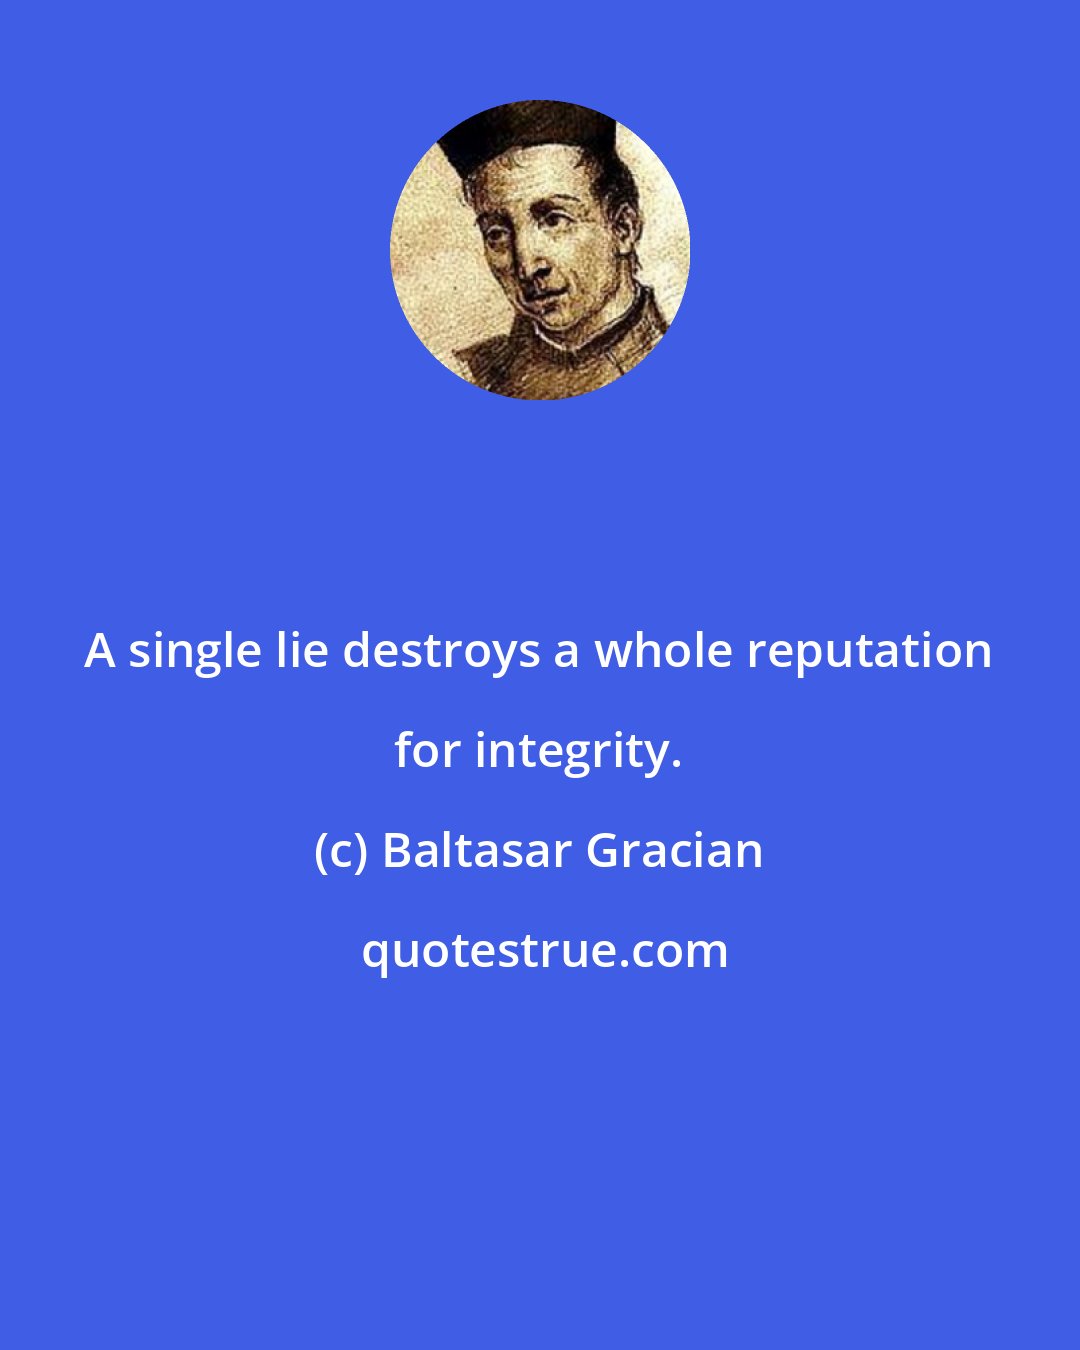 Baltasar Gracian: A single lie destroys a whole reputation for integrity.